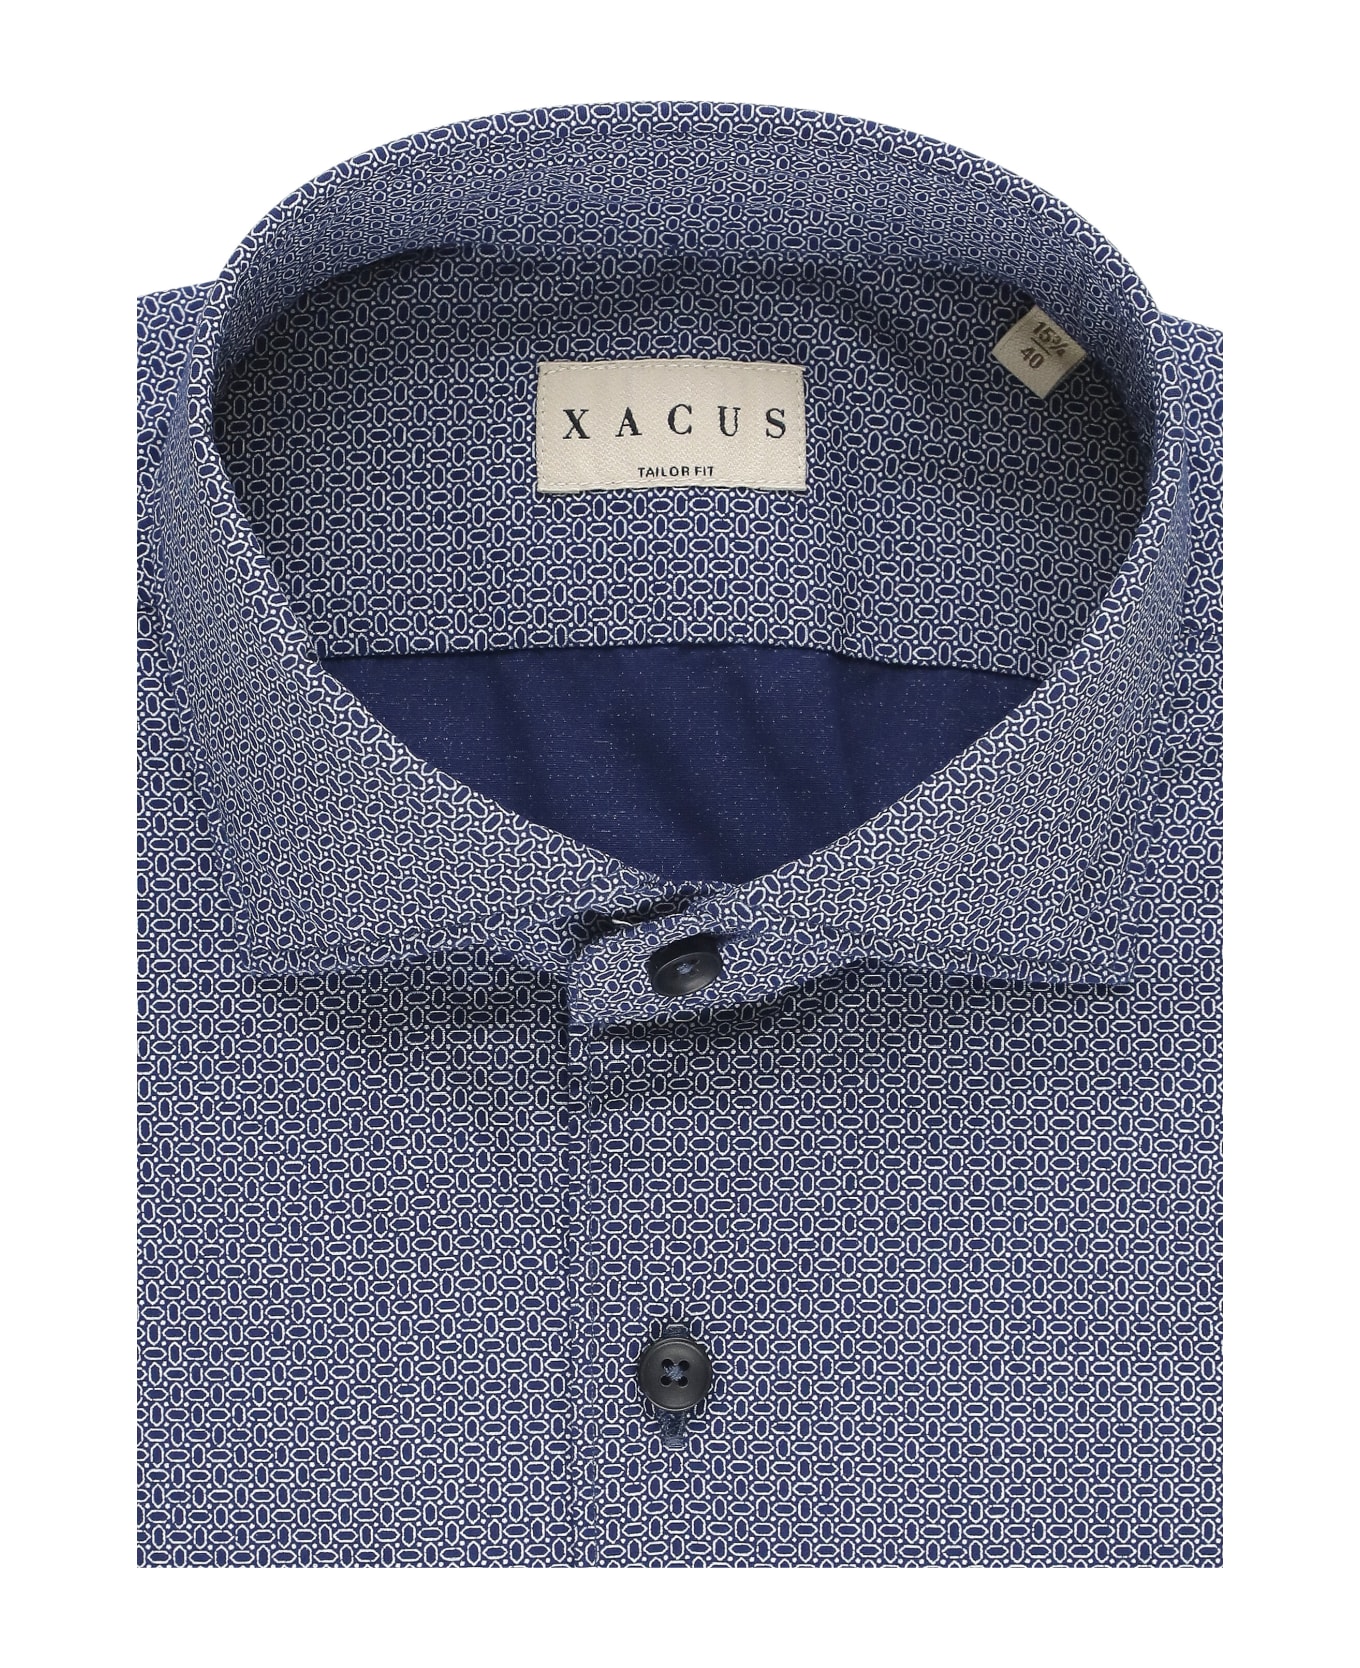 Xacus Tailor Shirt - Blue シャツ